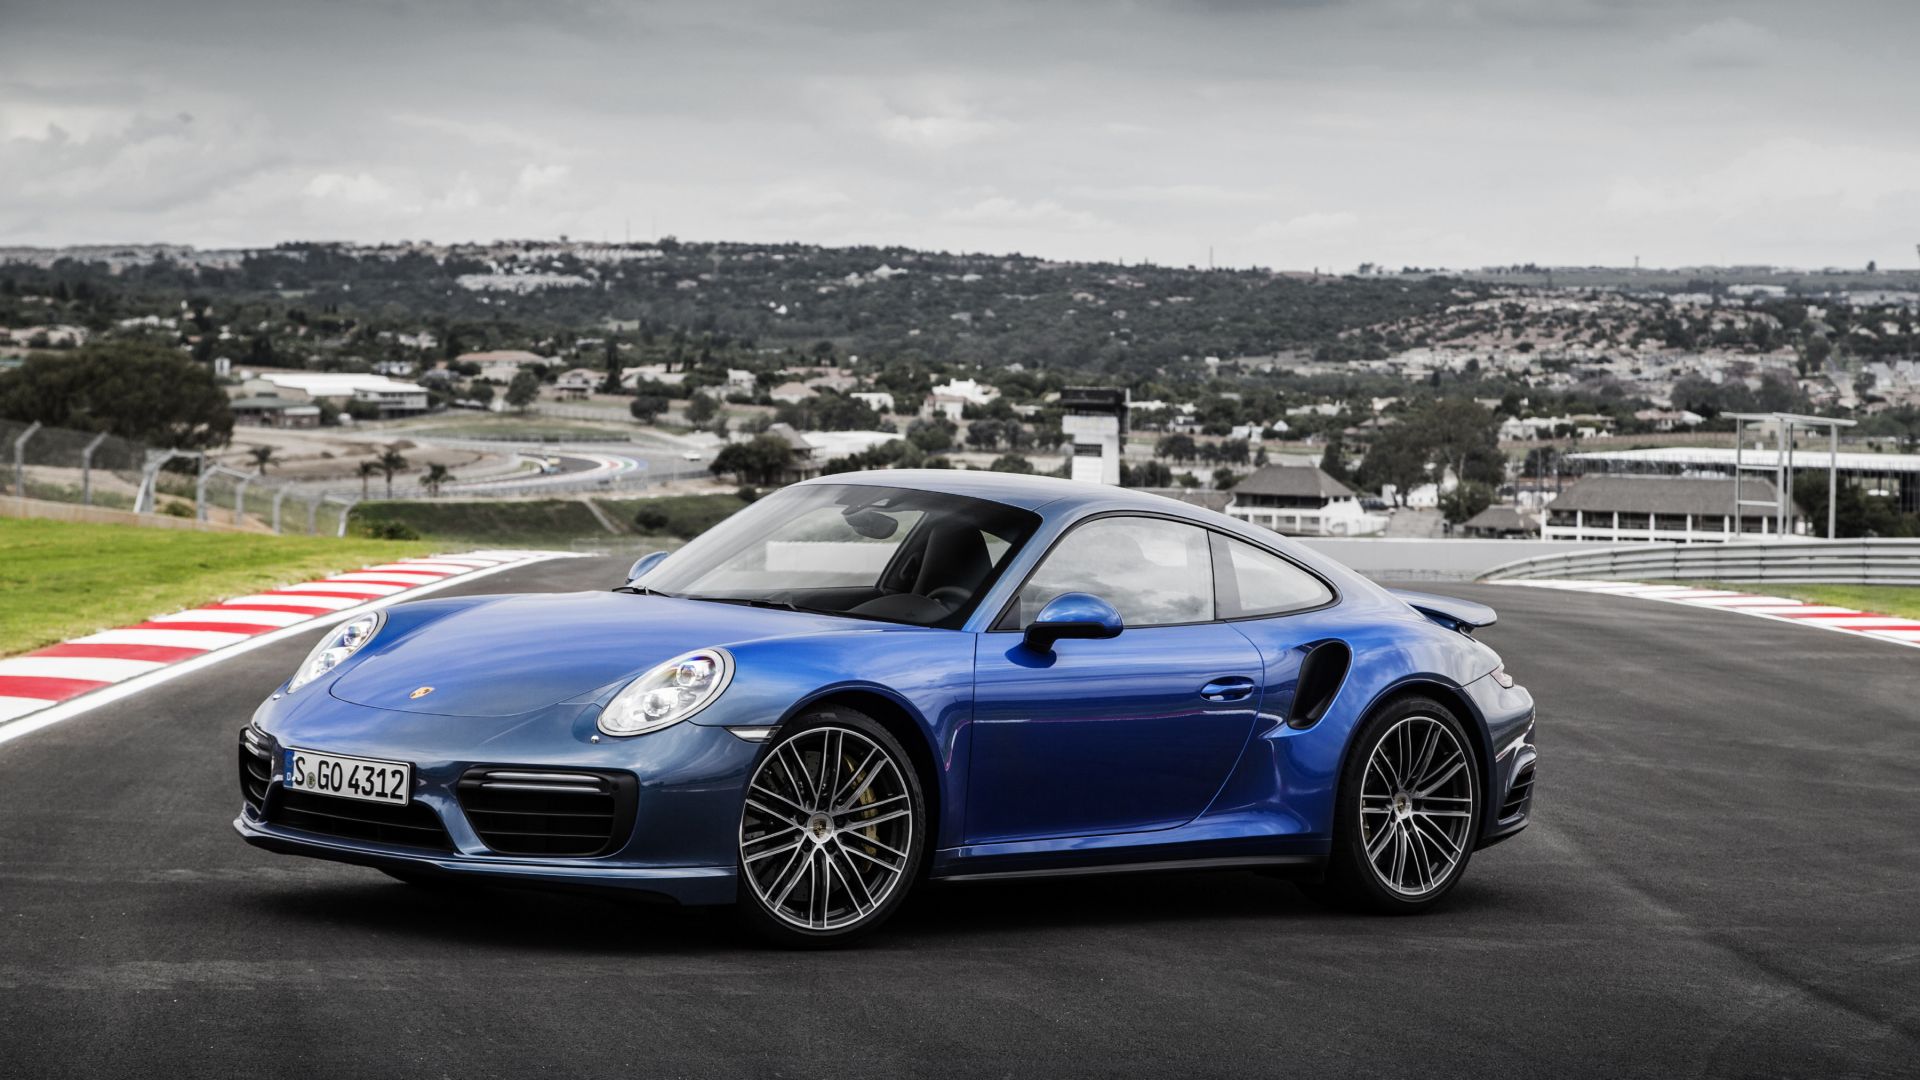 Wallpaper Porsche 911 Turbo, blue, sports car, side view